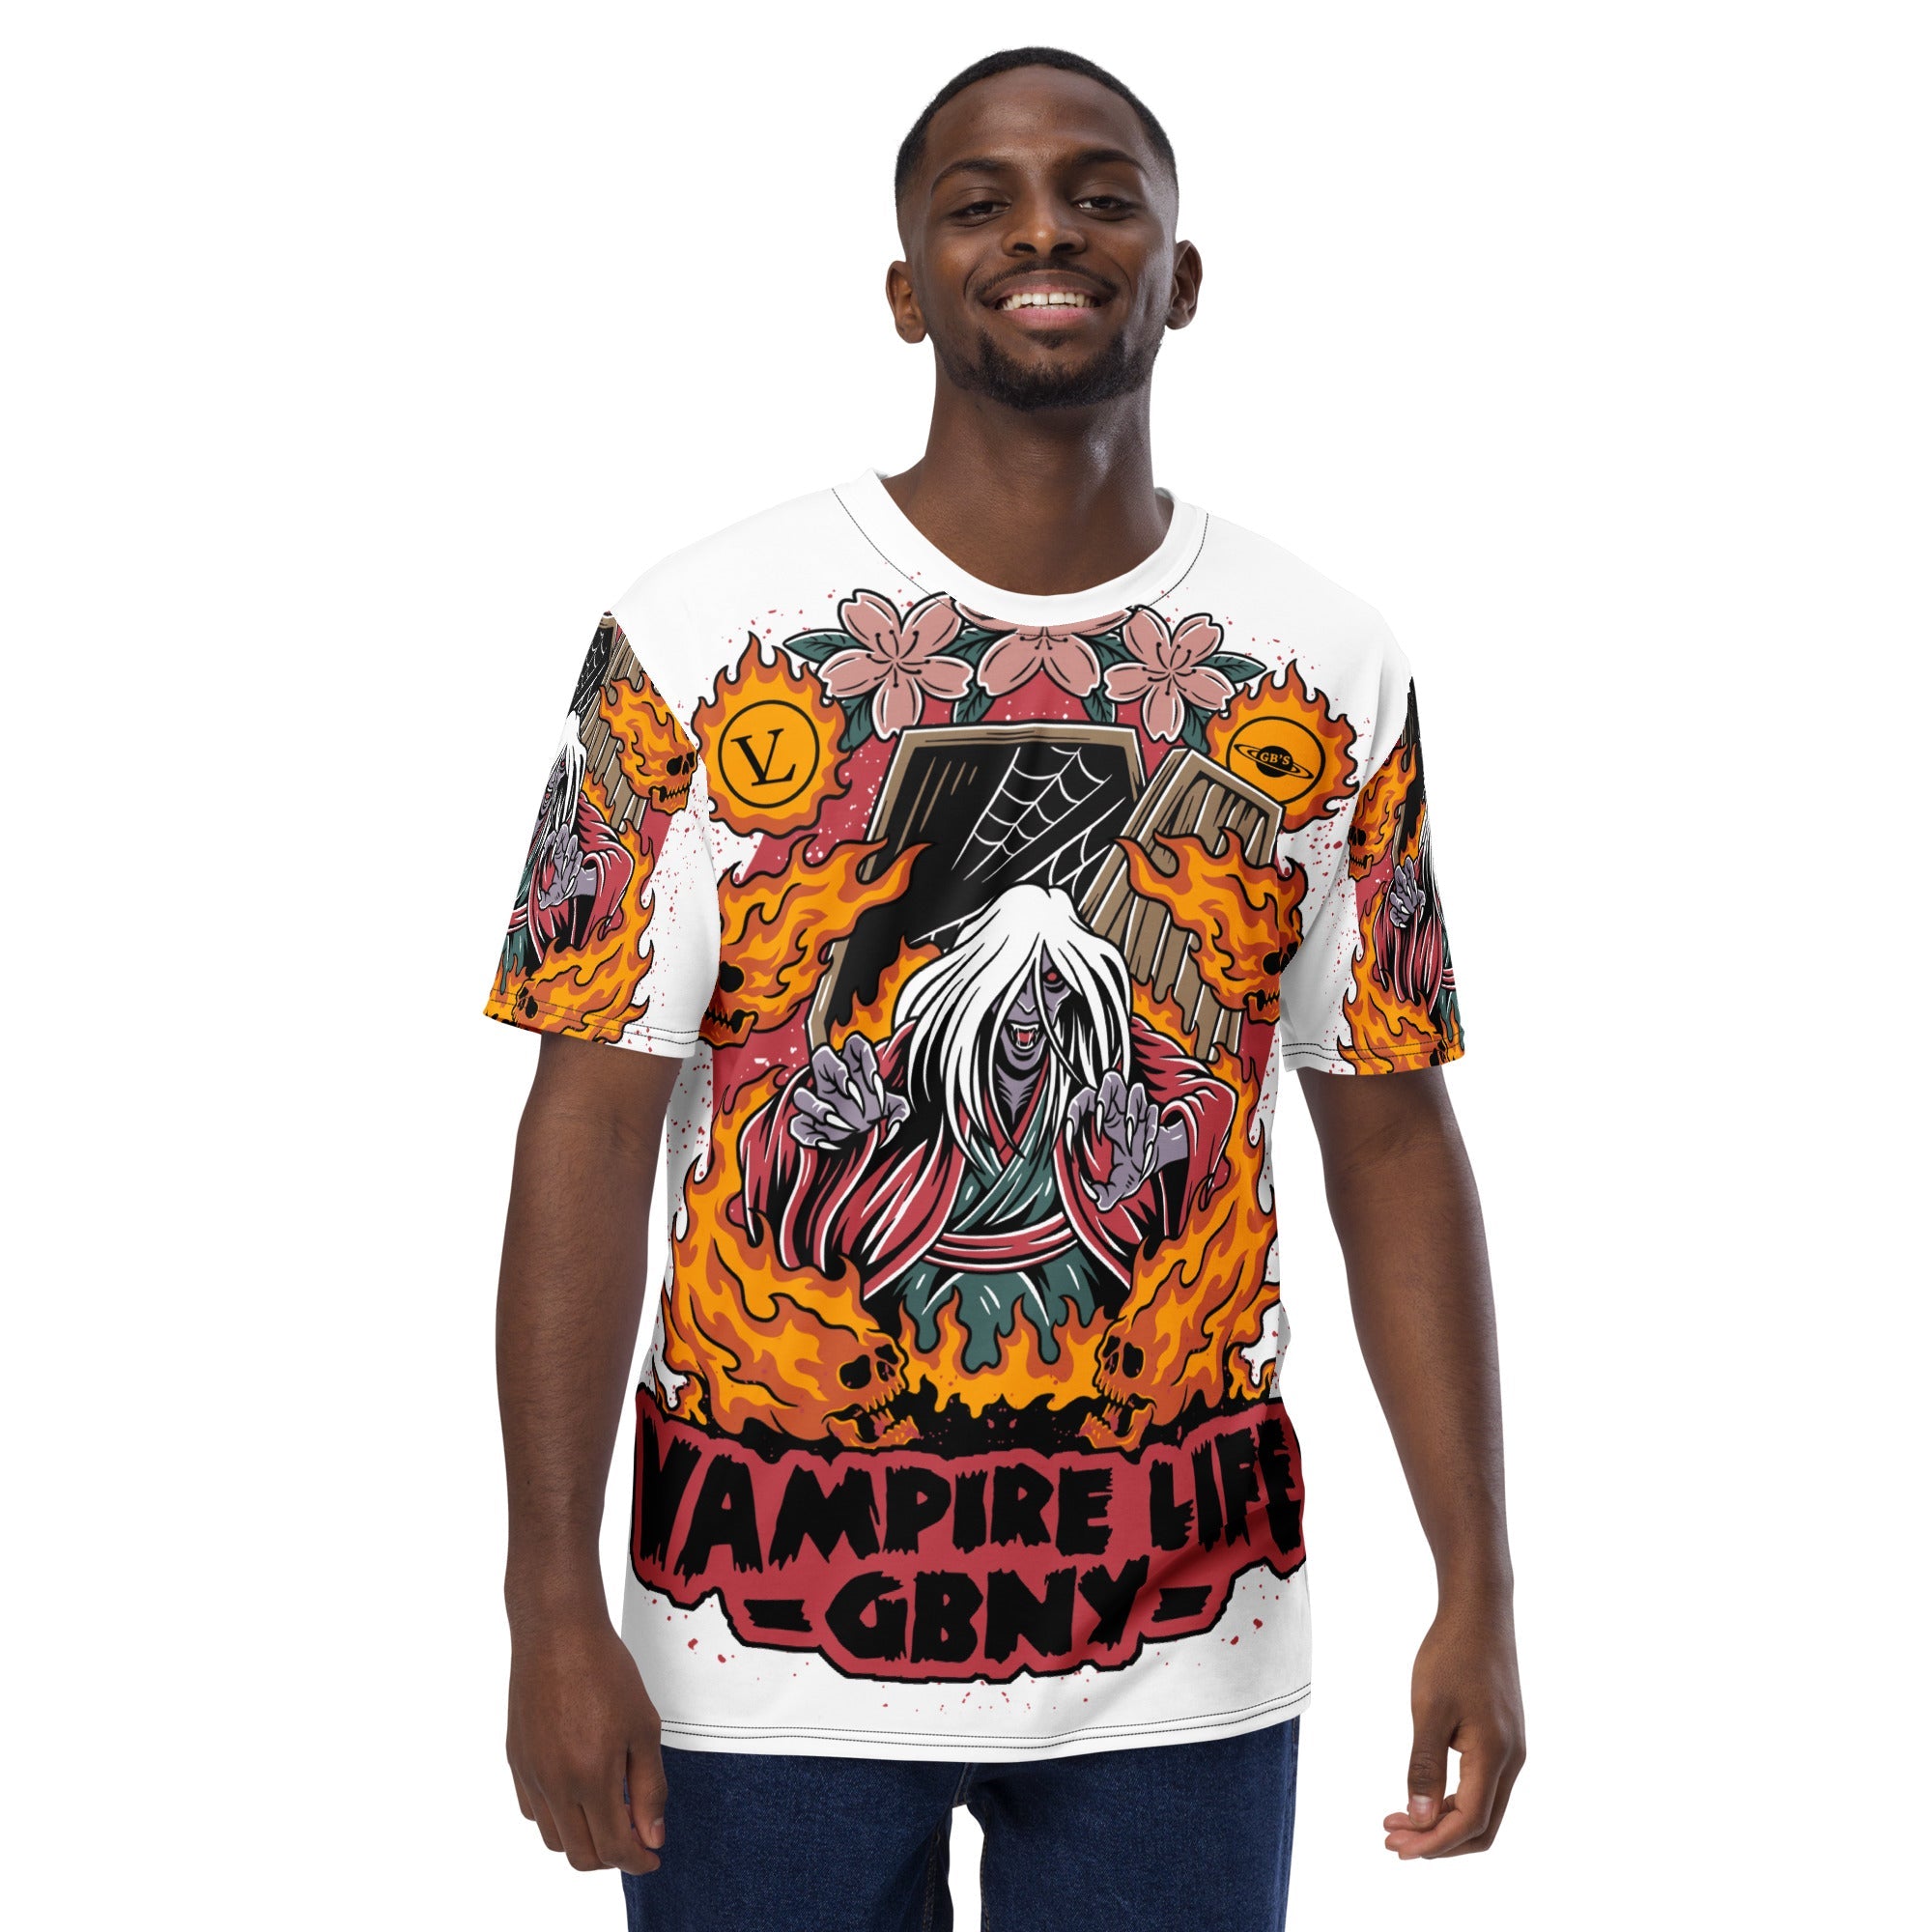 GBNY XS Vamp Life X GBNY "Fiery Vamp" All Over T-shirt - Men's 6159050_8850